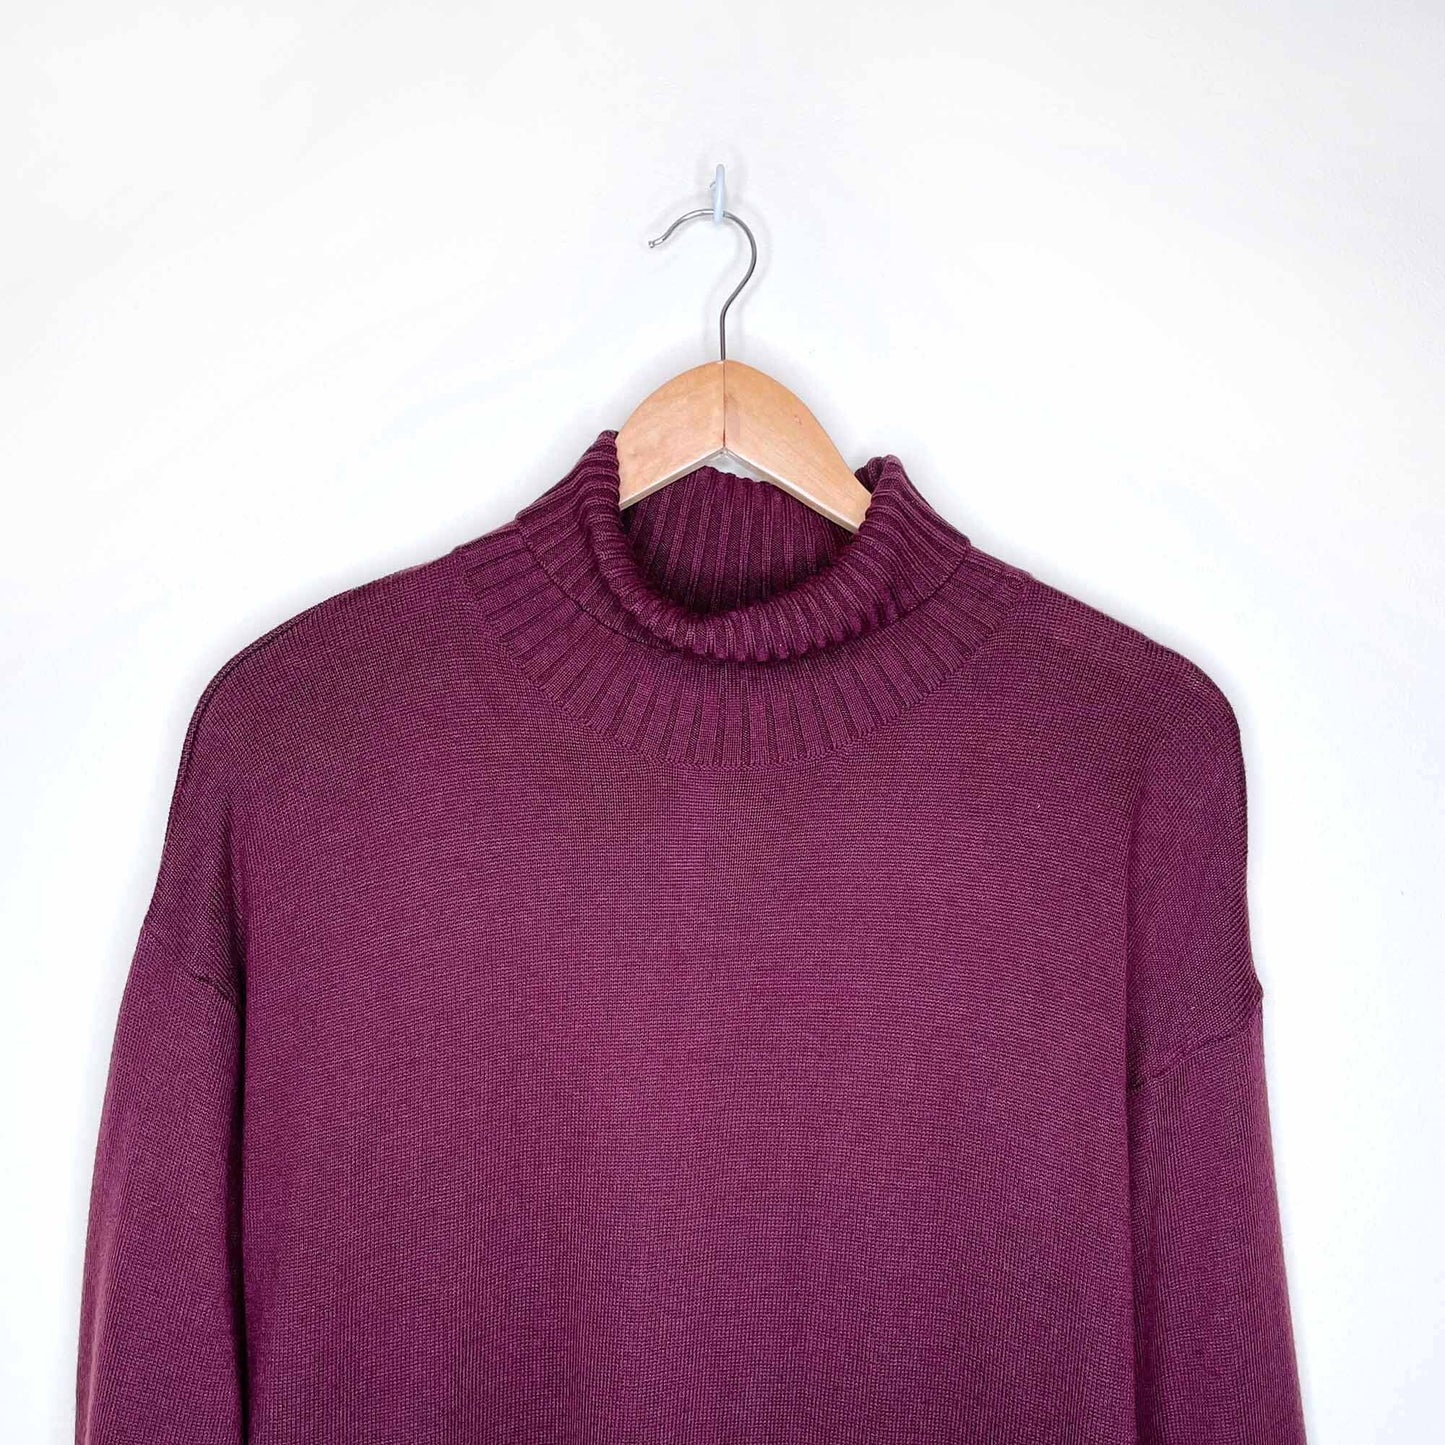 nwt lululemon softer still sweater dress with cashmere - size xs